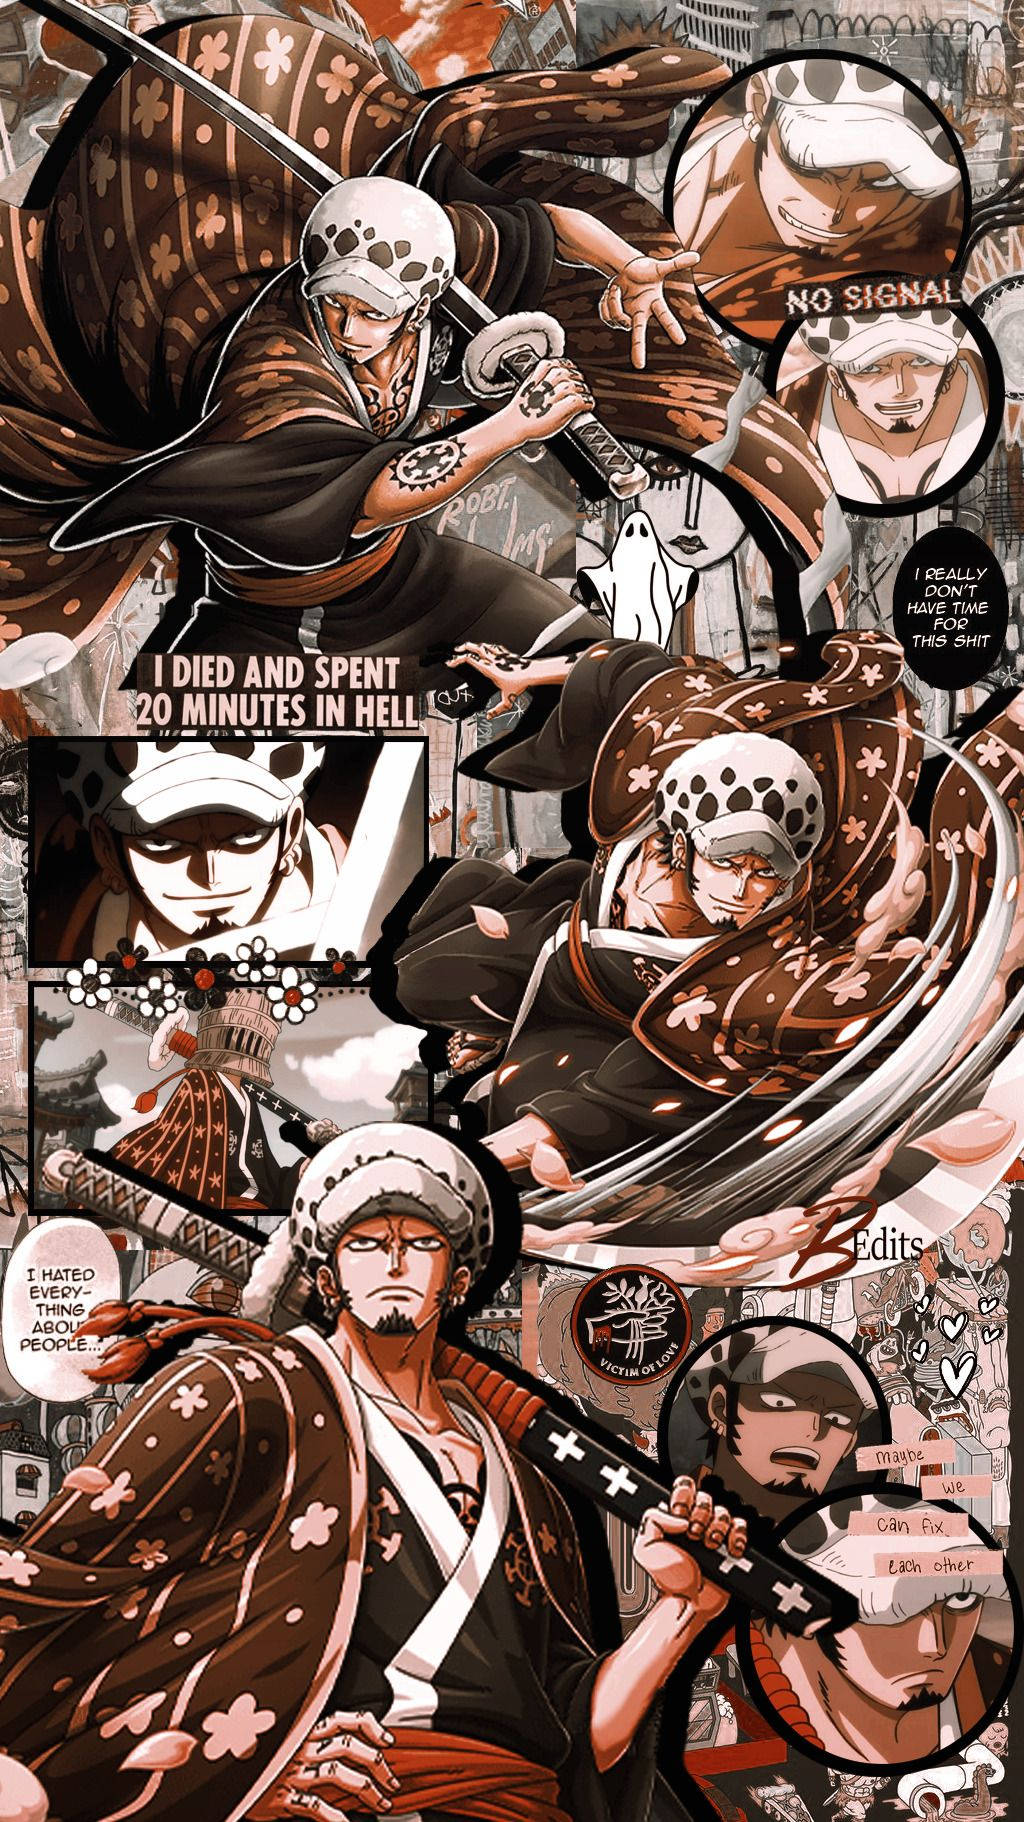 Awesome Trafalgar One Piece Aesthetic Wallpaper